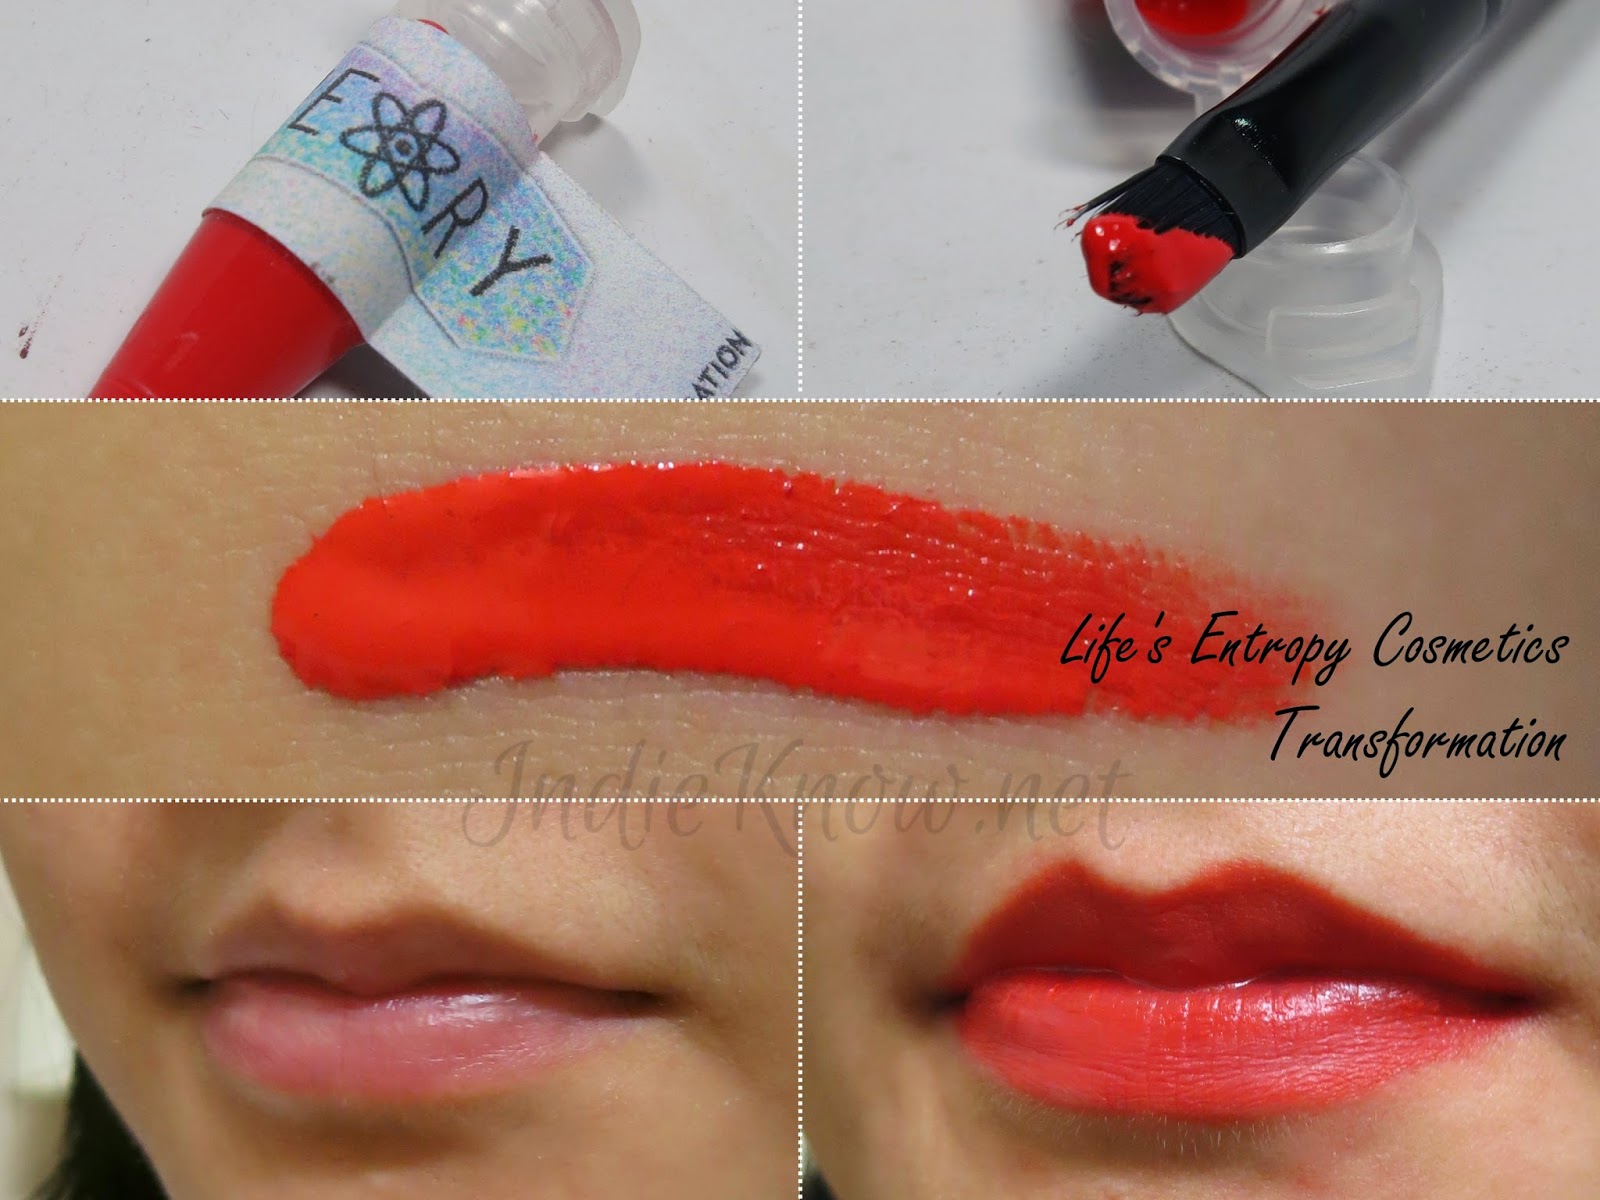 Life's Entropy Cosmetics Lip Theory Transformation